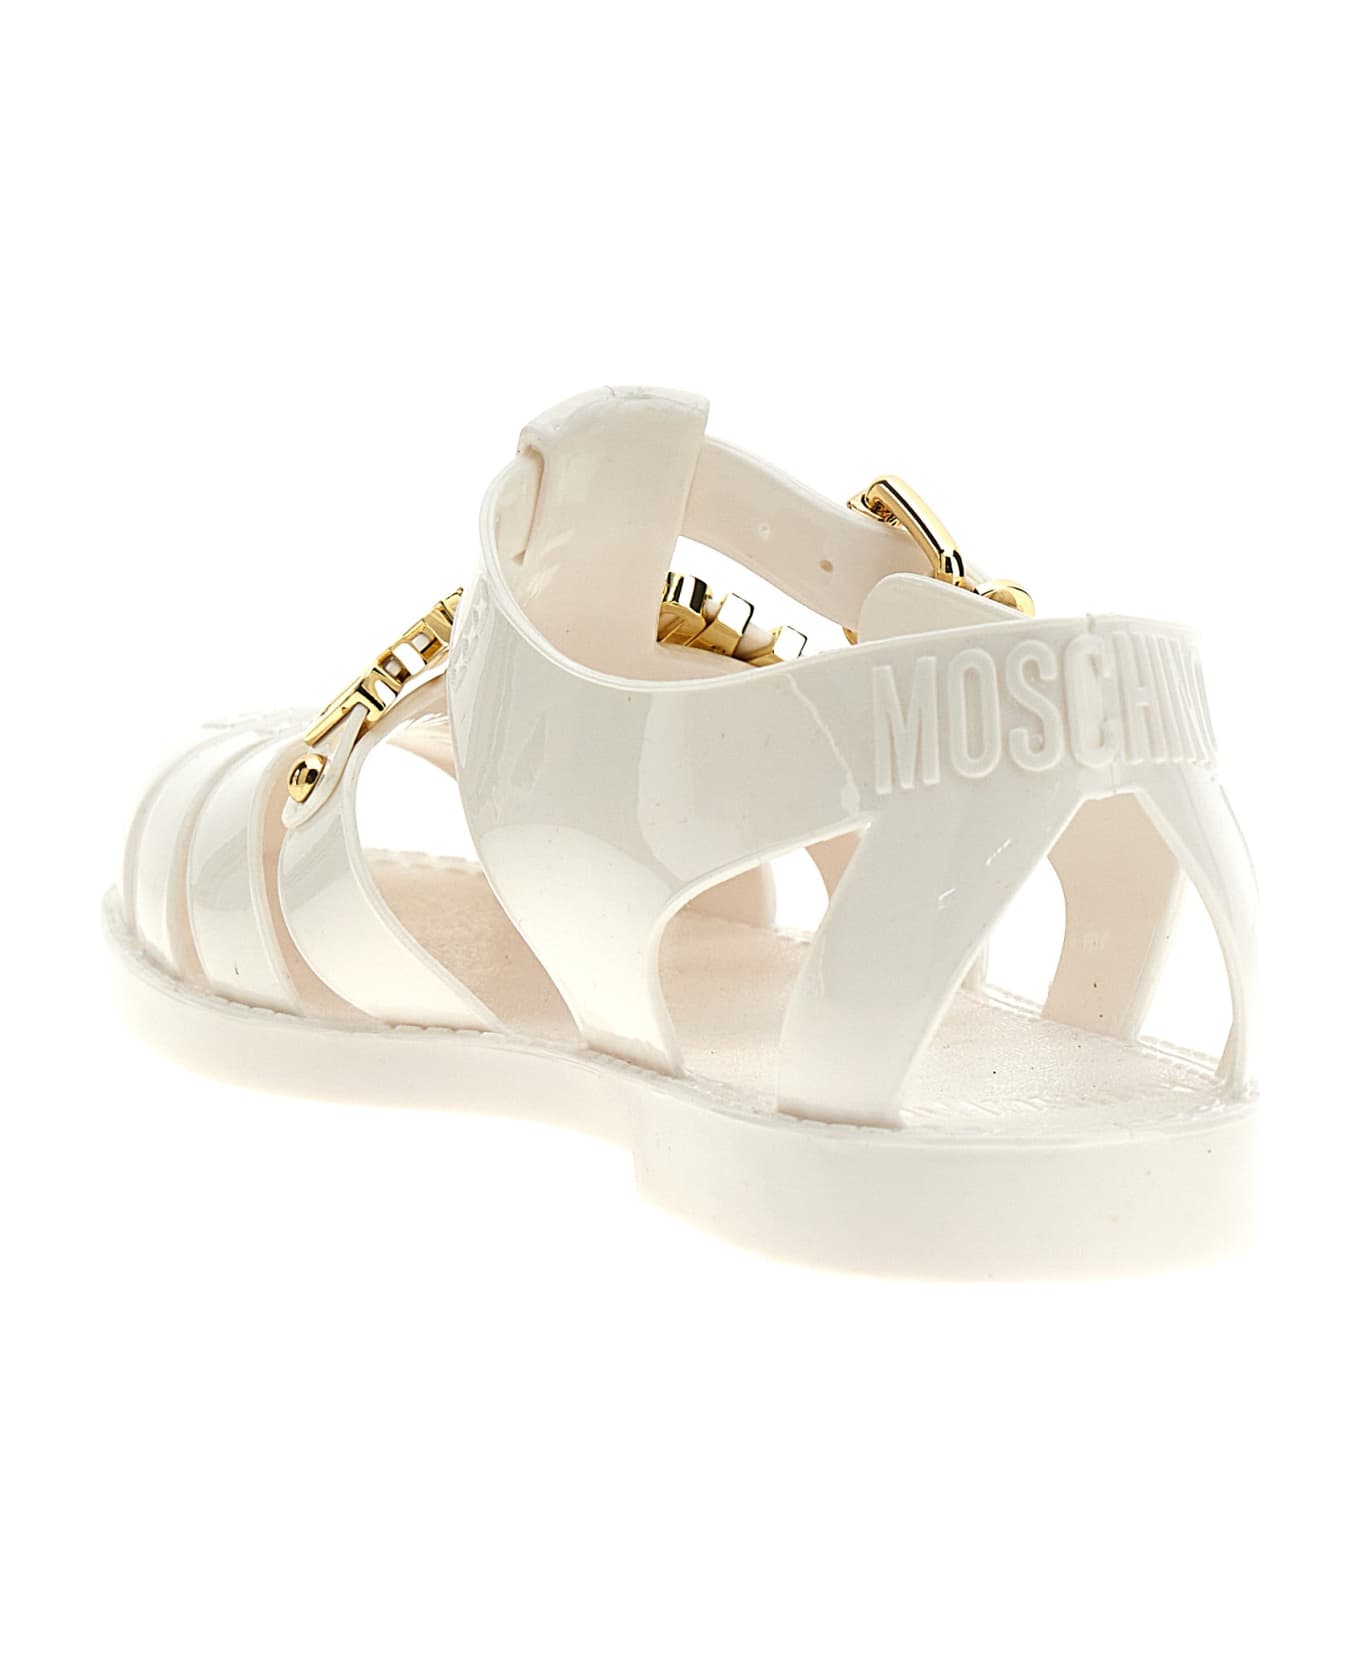 Moschino Jelly Sandals - White